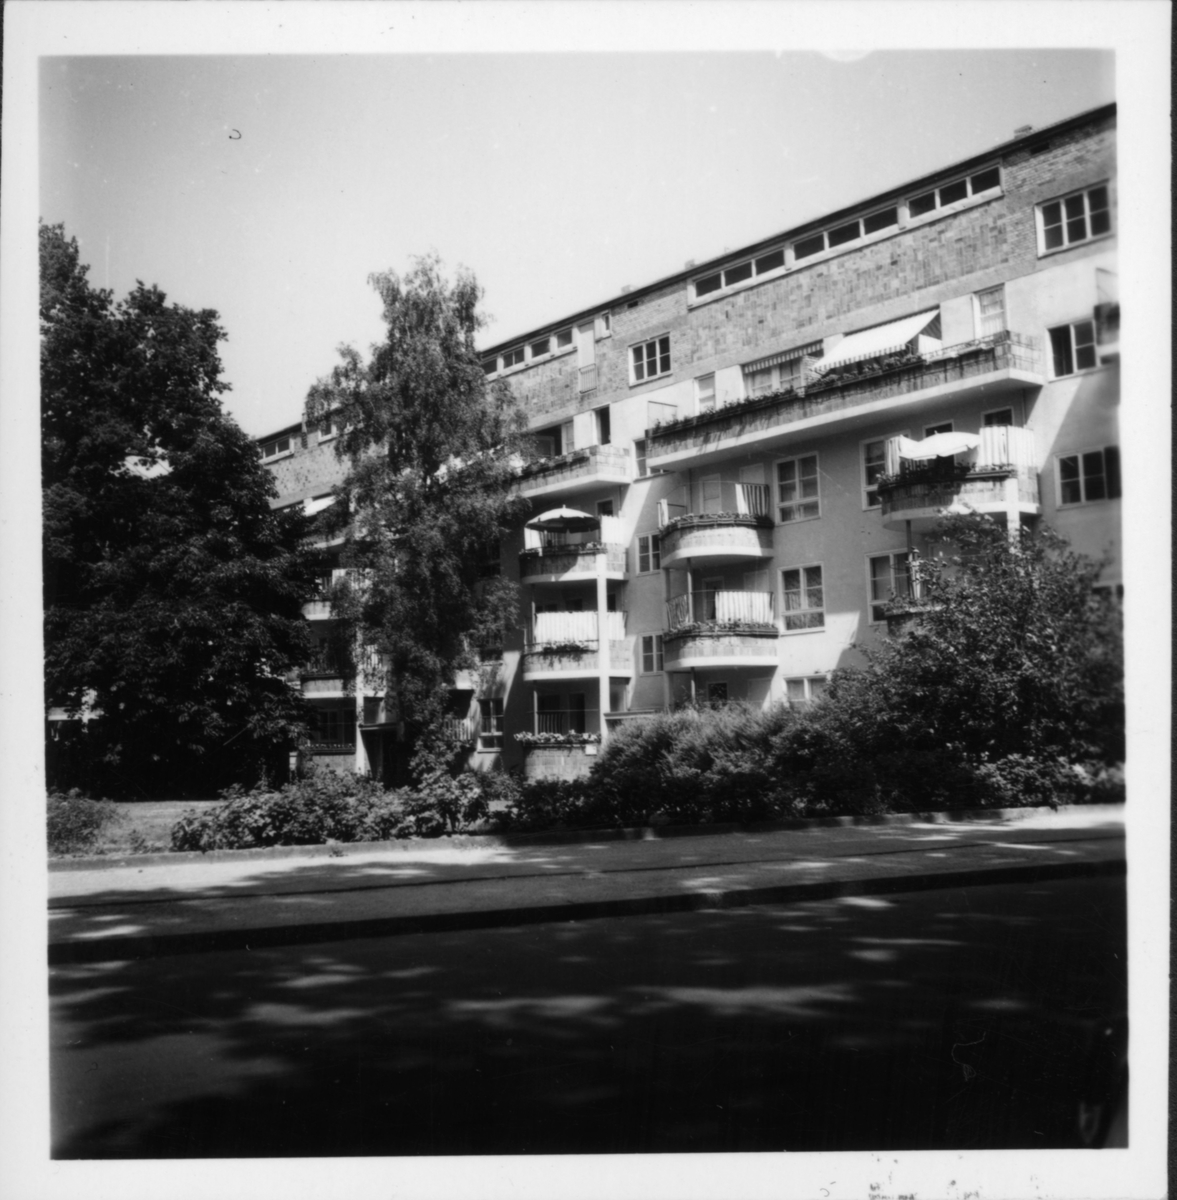 Siemensstadt
Fasad